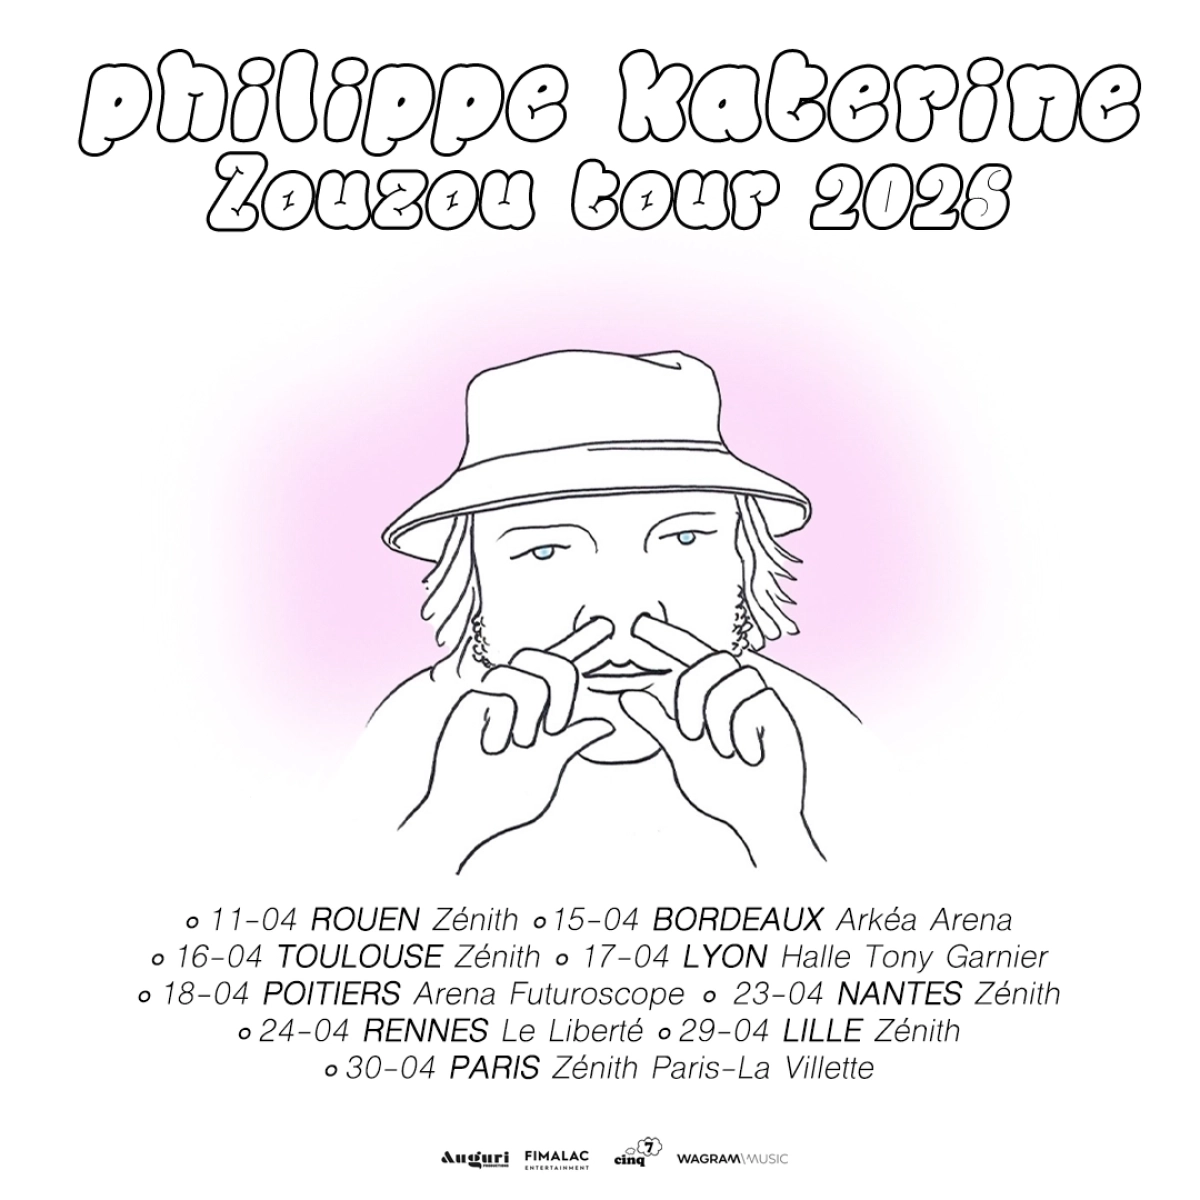 Philippe Katerine at Arena Futuroscope Tickets